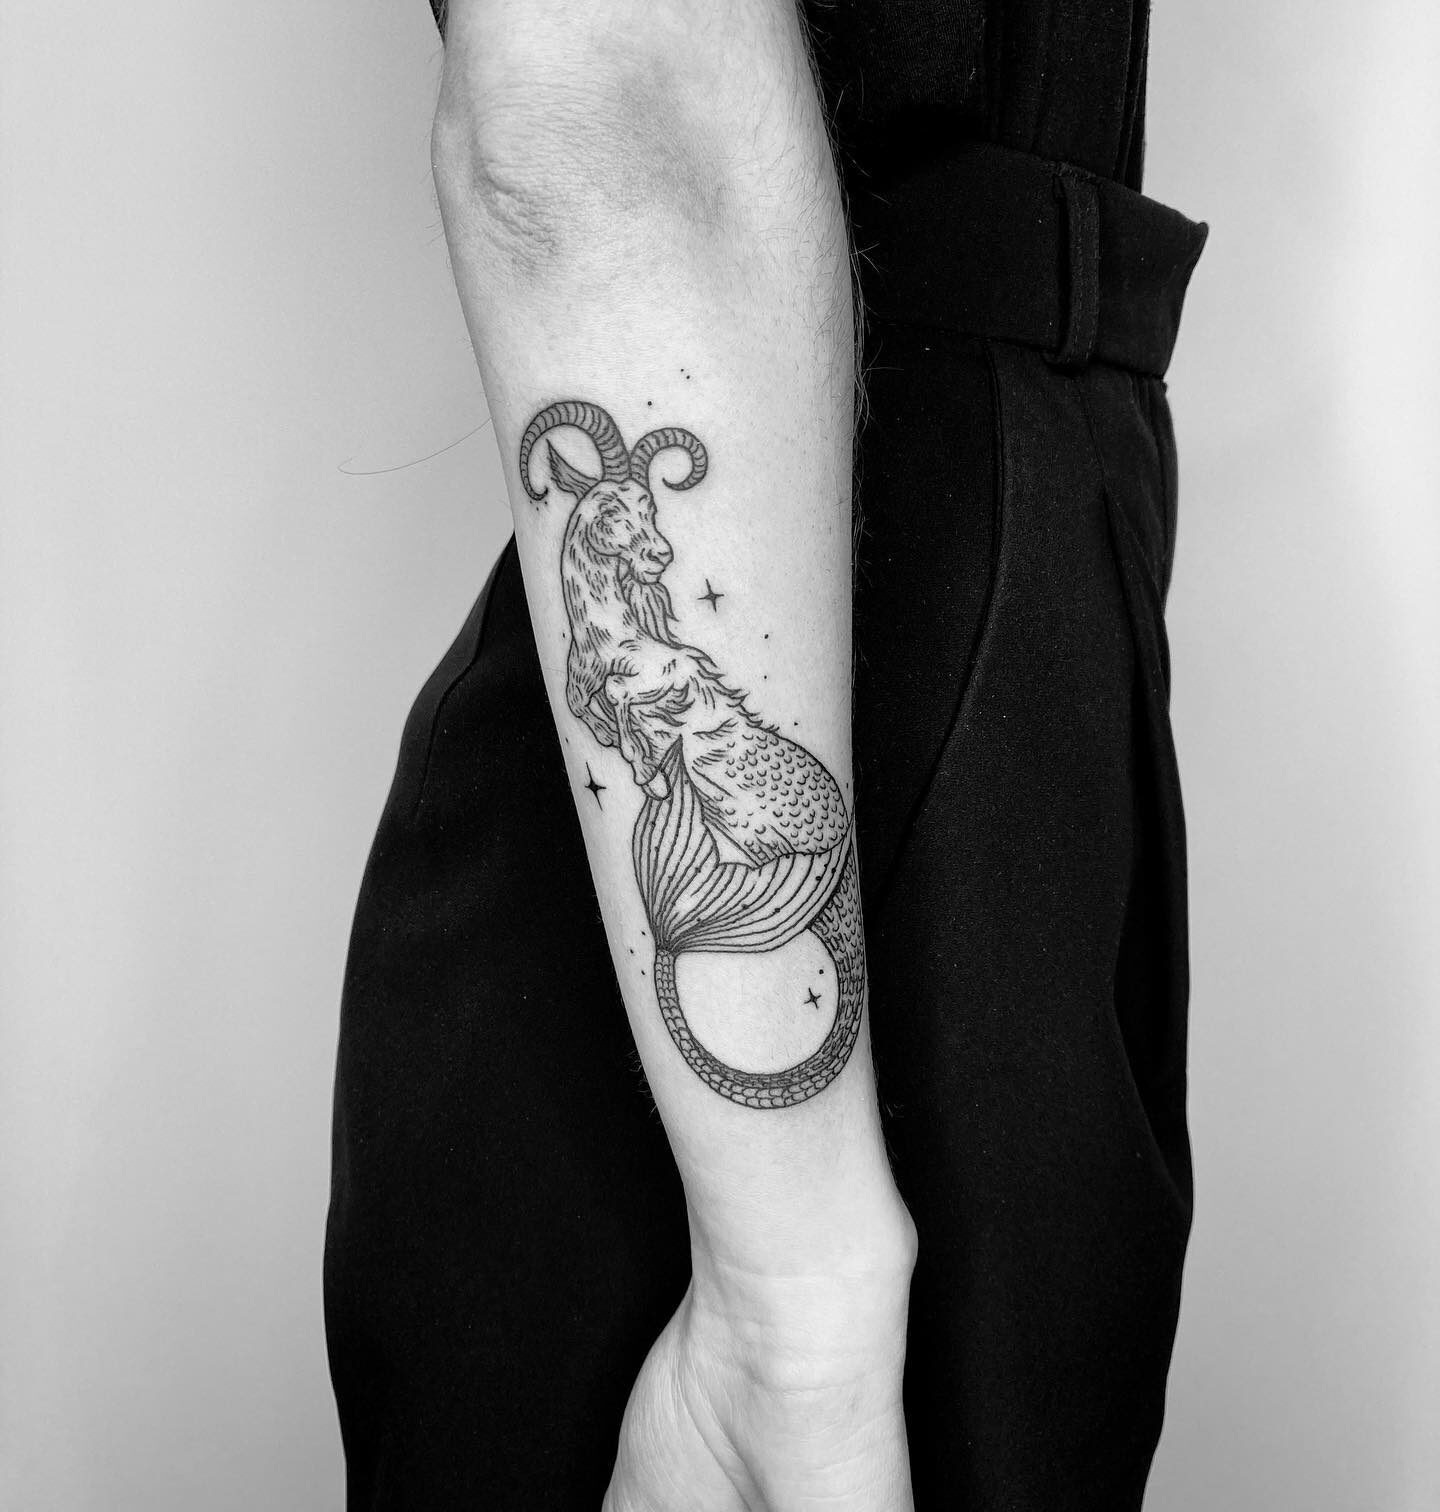 Sea goat tattoo located on the forearm